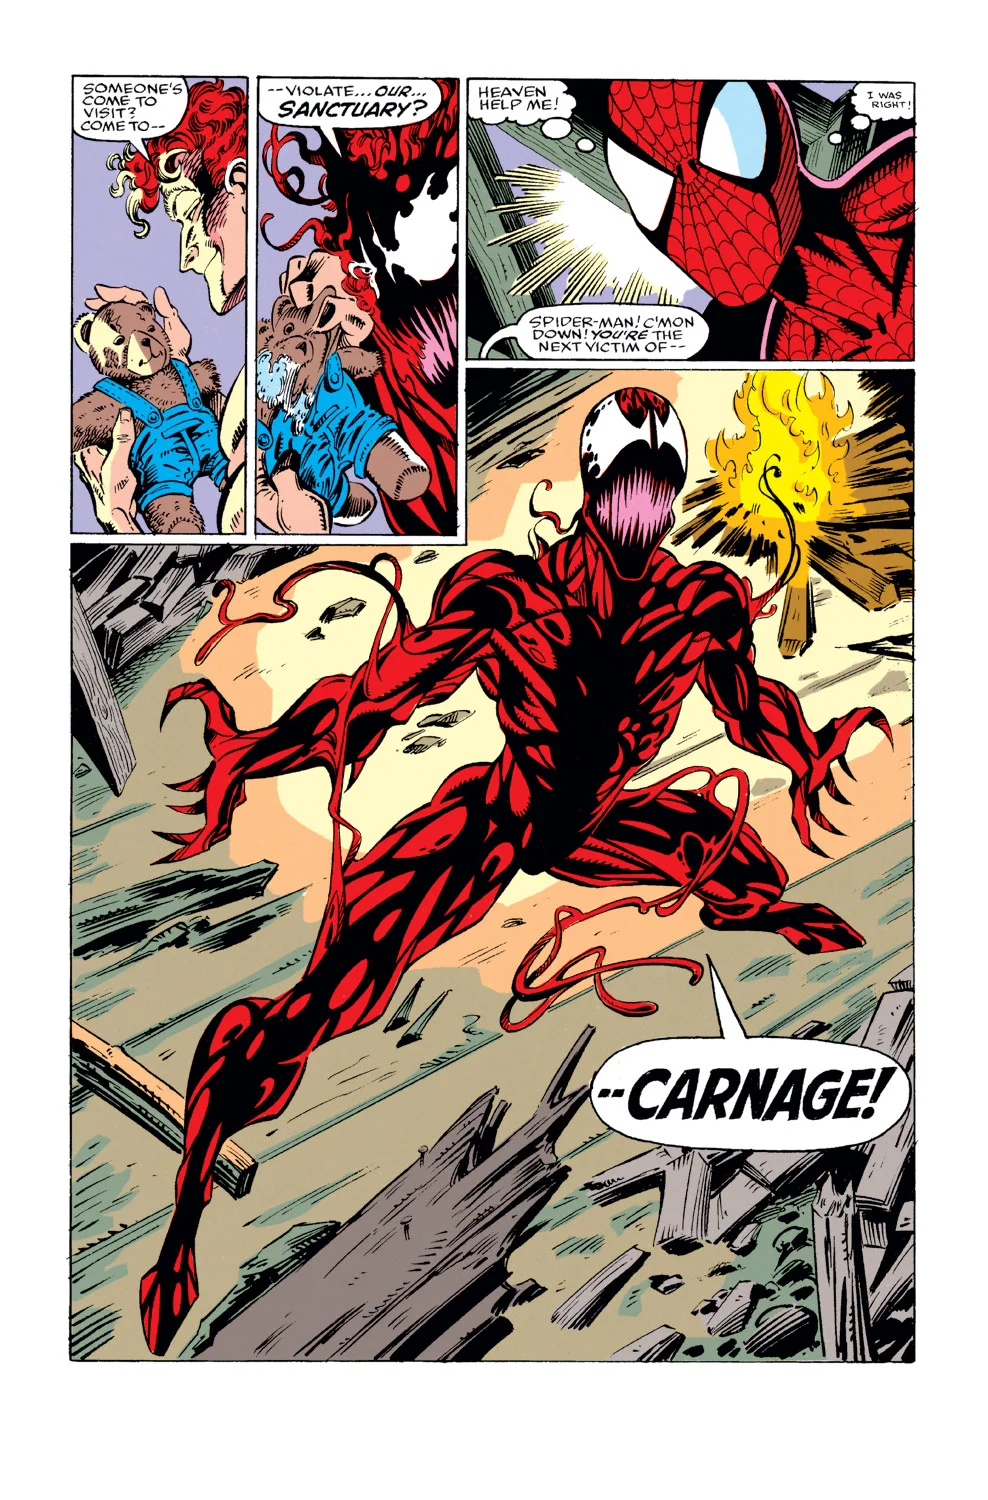 История Карнажа — самого безумного врага Человека-паука - фото 2